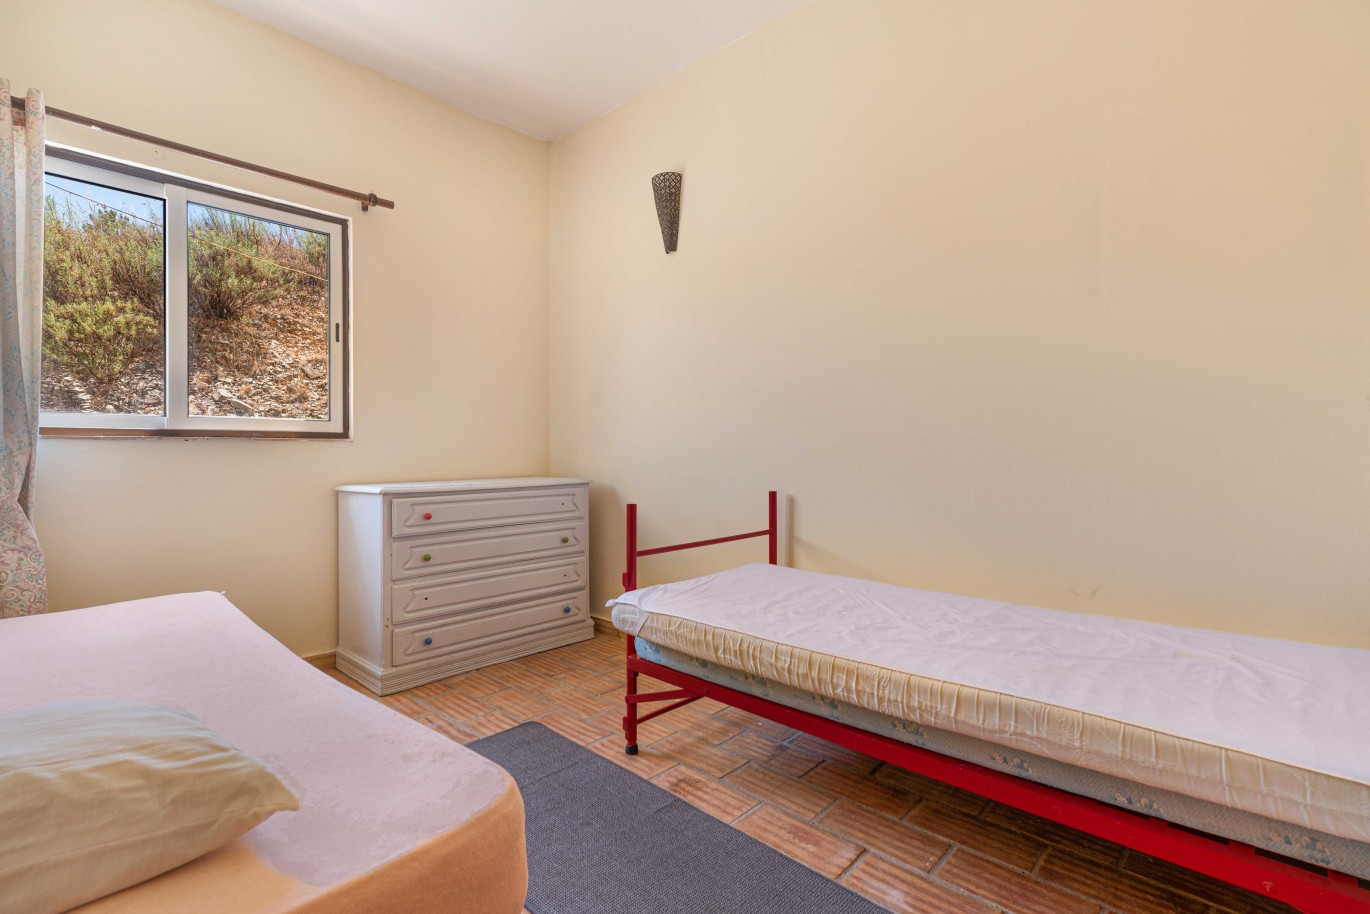 9 Bedroom Country Villa à vendre à Pereira, Algarve_231605